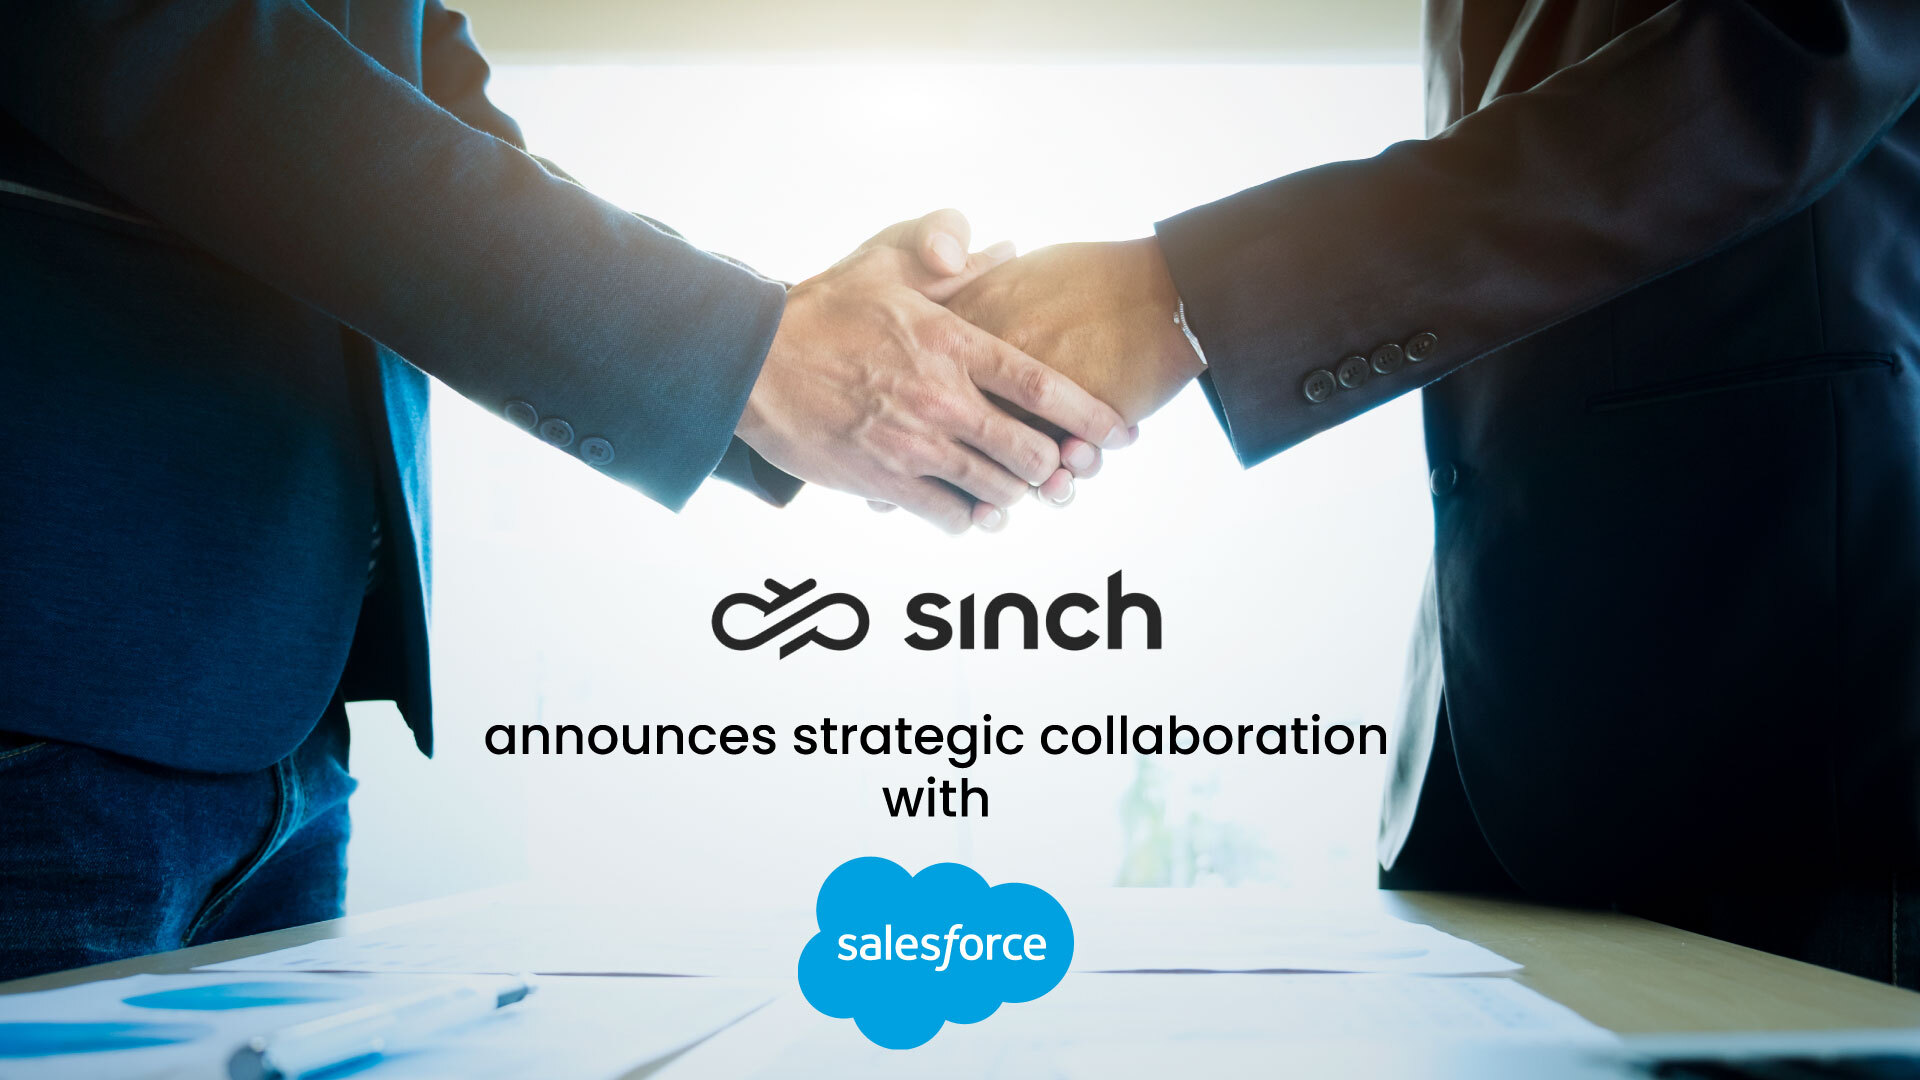 Sinch Announces Strategic Collaboration With Salesforce Through